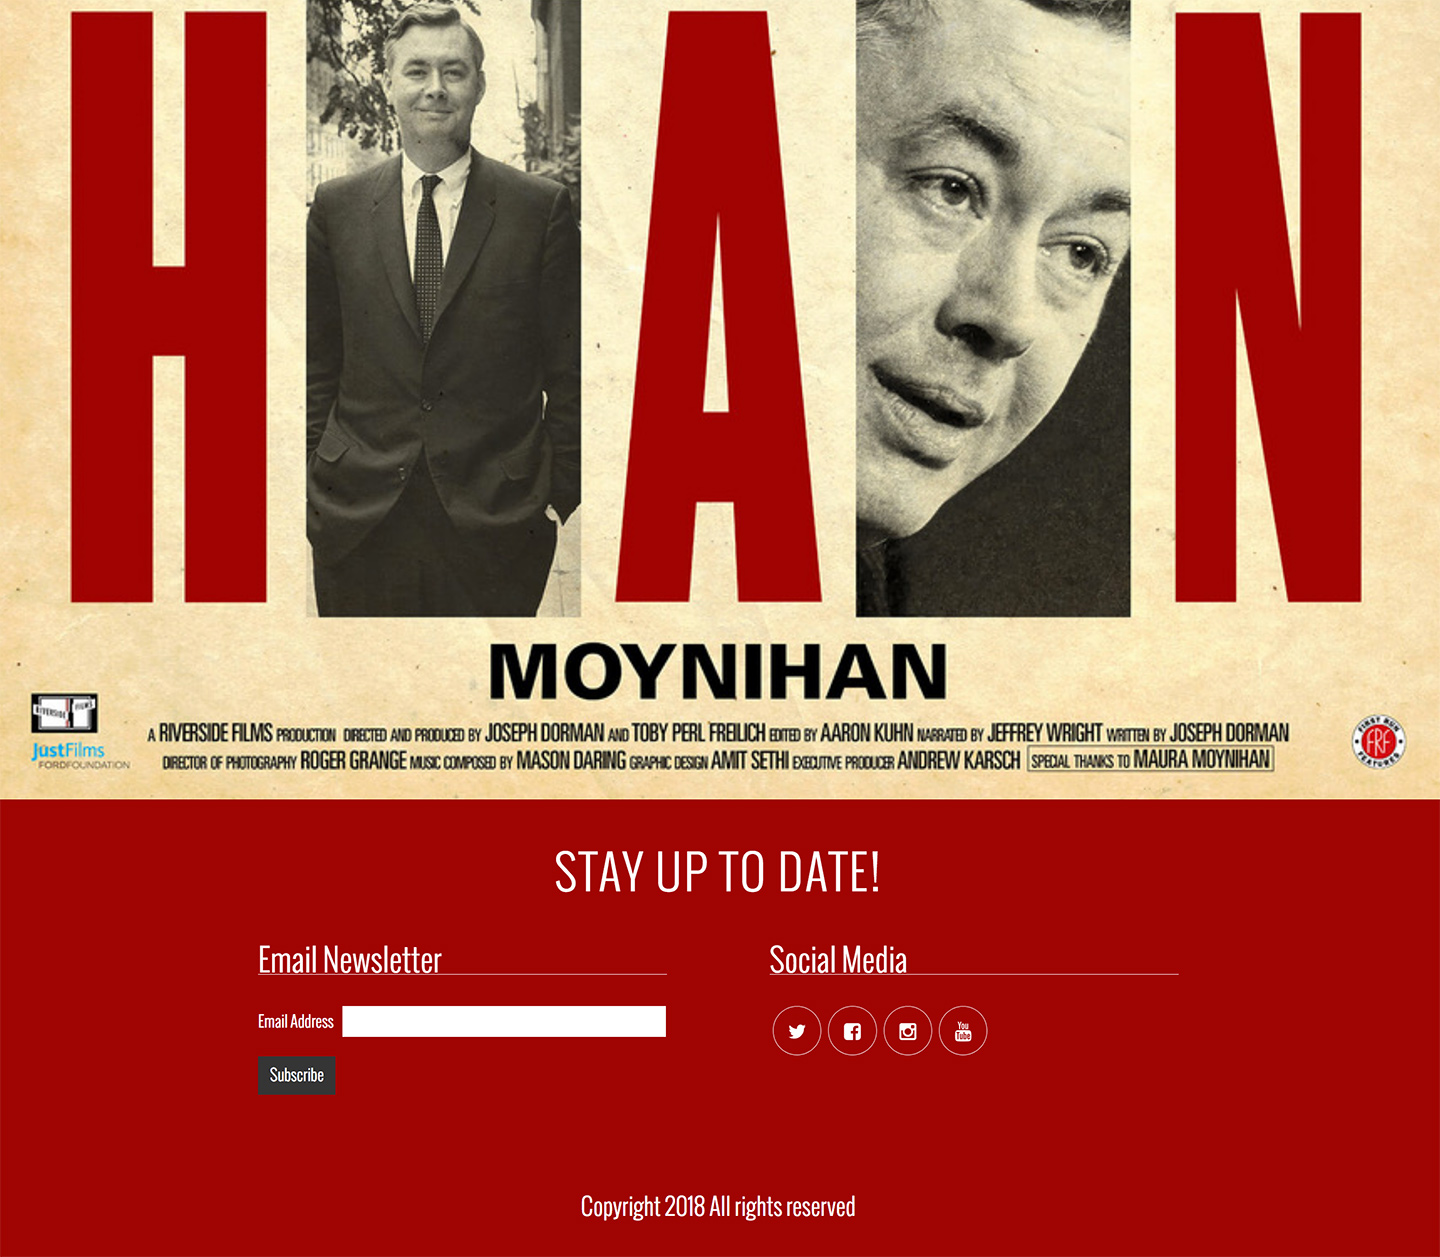 The Daniel Patrick Moynihan Film Project: Daniel Patrick Moynihan Film Stay up to date